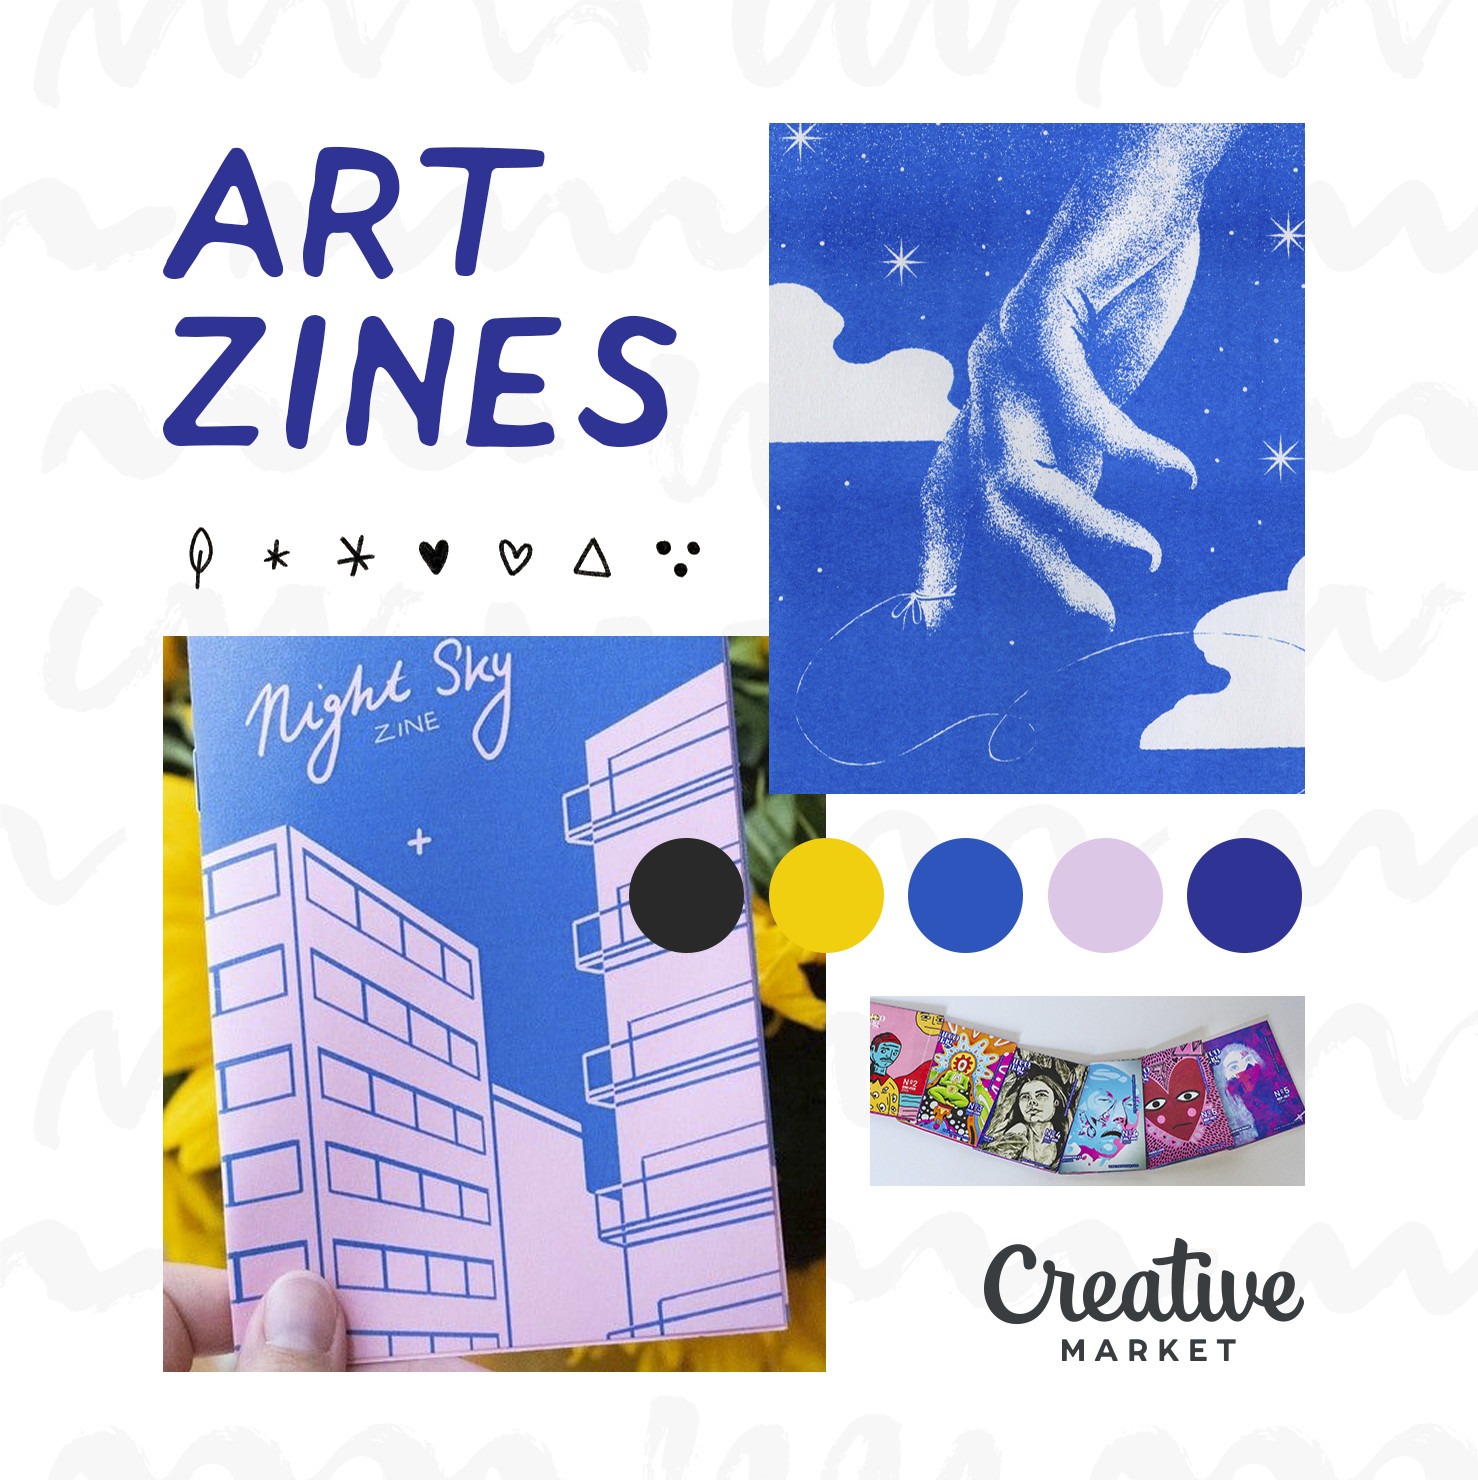 Local artists showcase ama-zine works | Lifestyle | guampdn.com